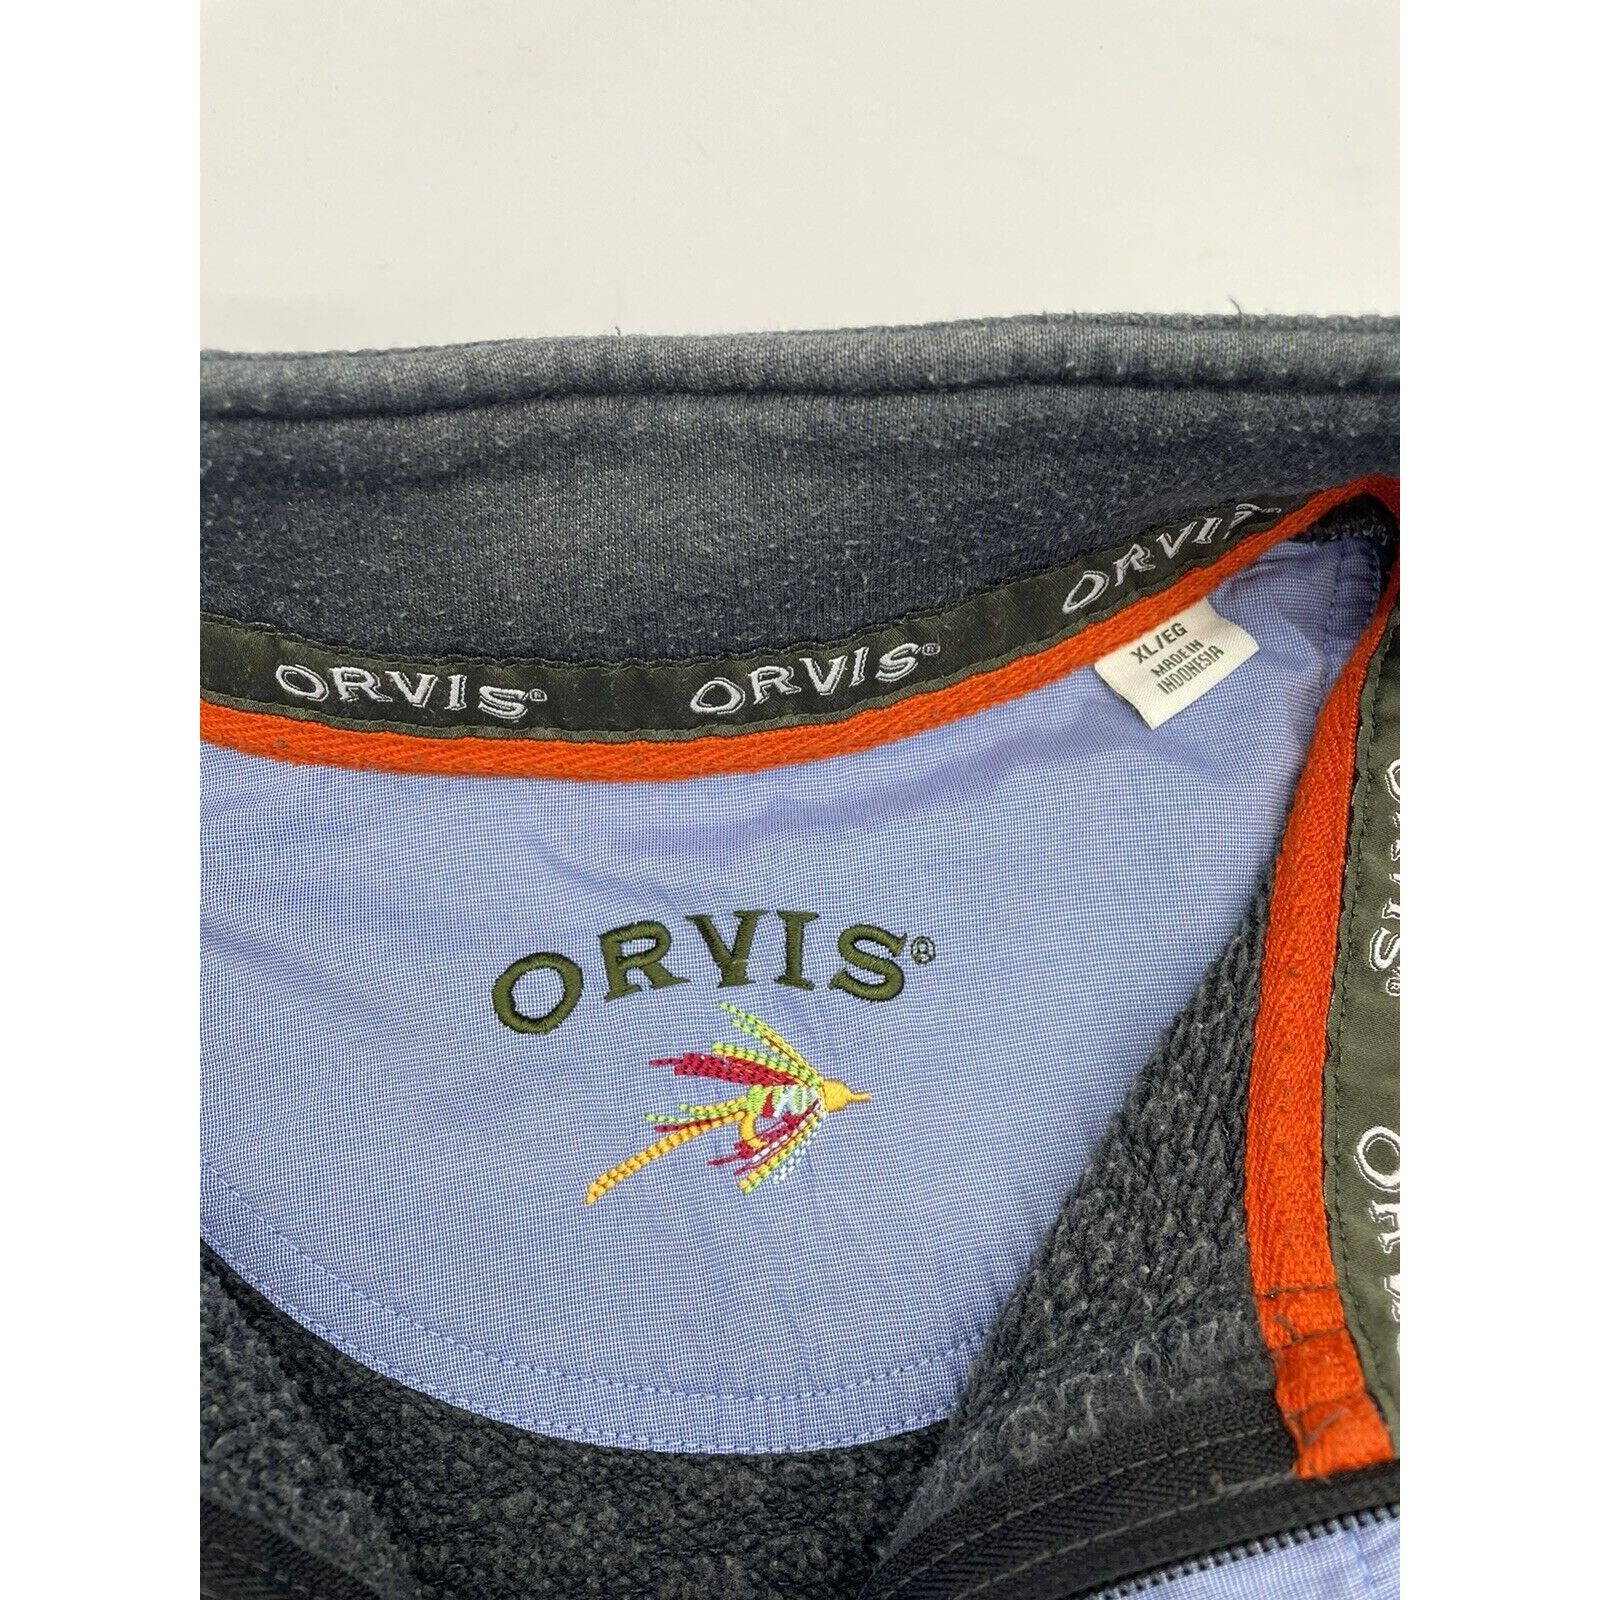 Orvis Orvis Men's Fleece Pullover Sz XL Gray 1/4 Zip Snap Sweatshi Size US XL / EU 56 / 4 - 2 Preview